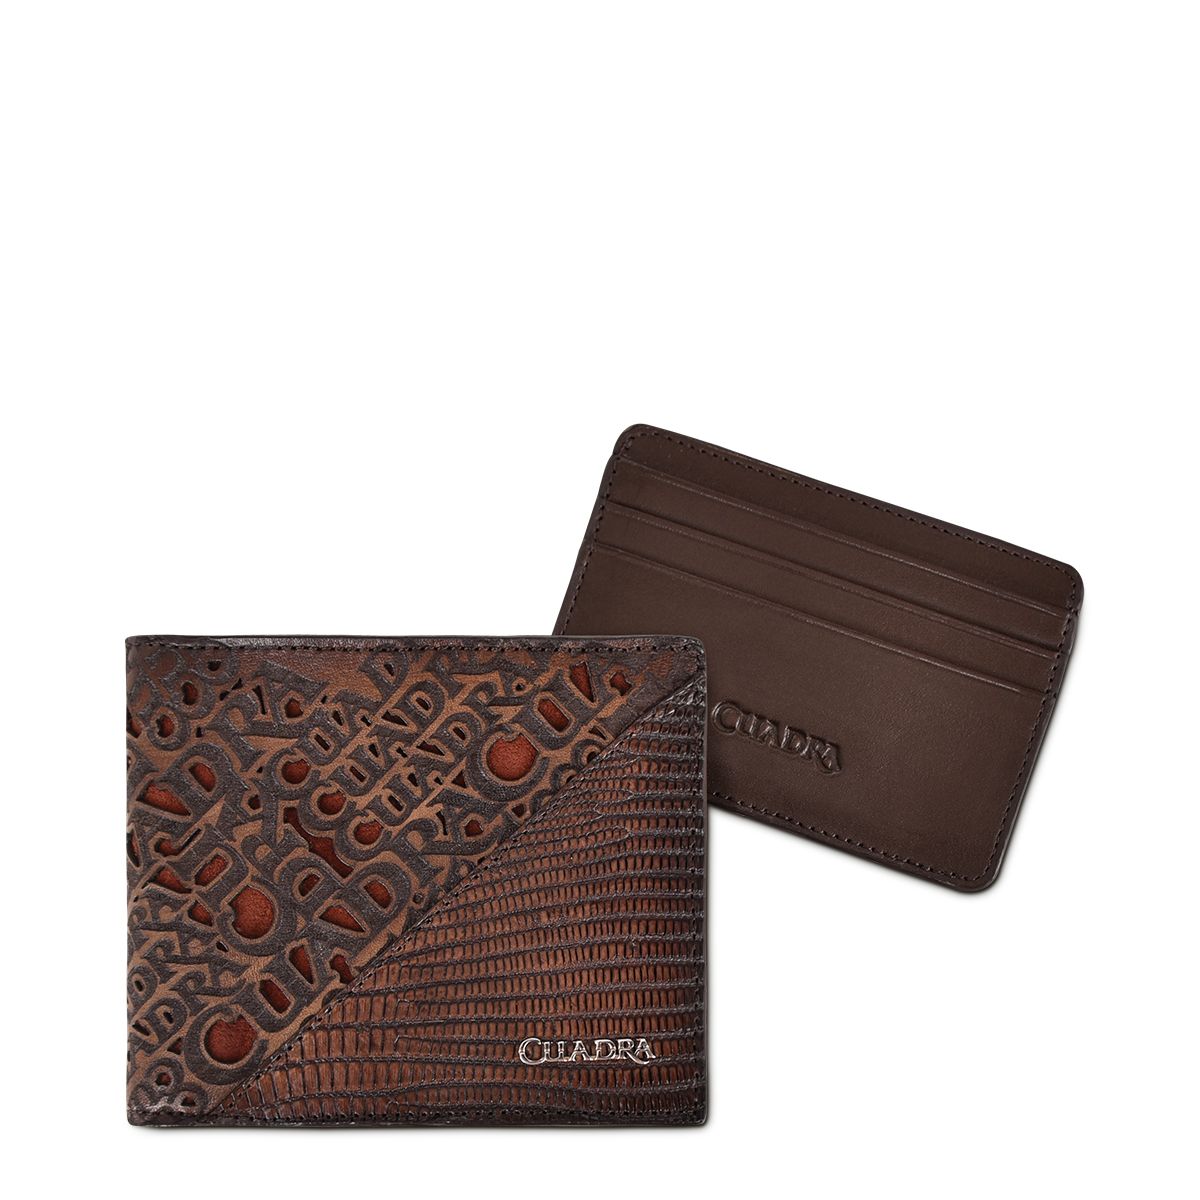 B3033LT - Cuadra brown casual fashion lizard leather bi fold wallet for men-Kuet.us